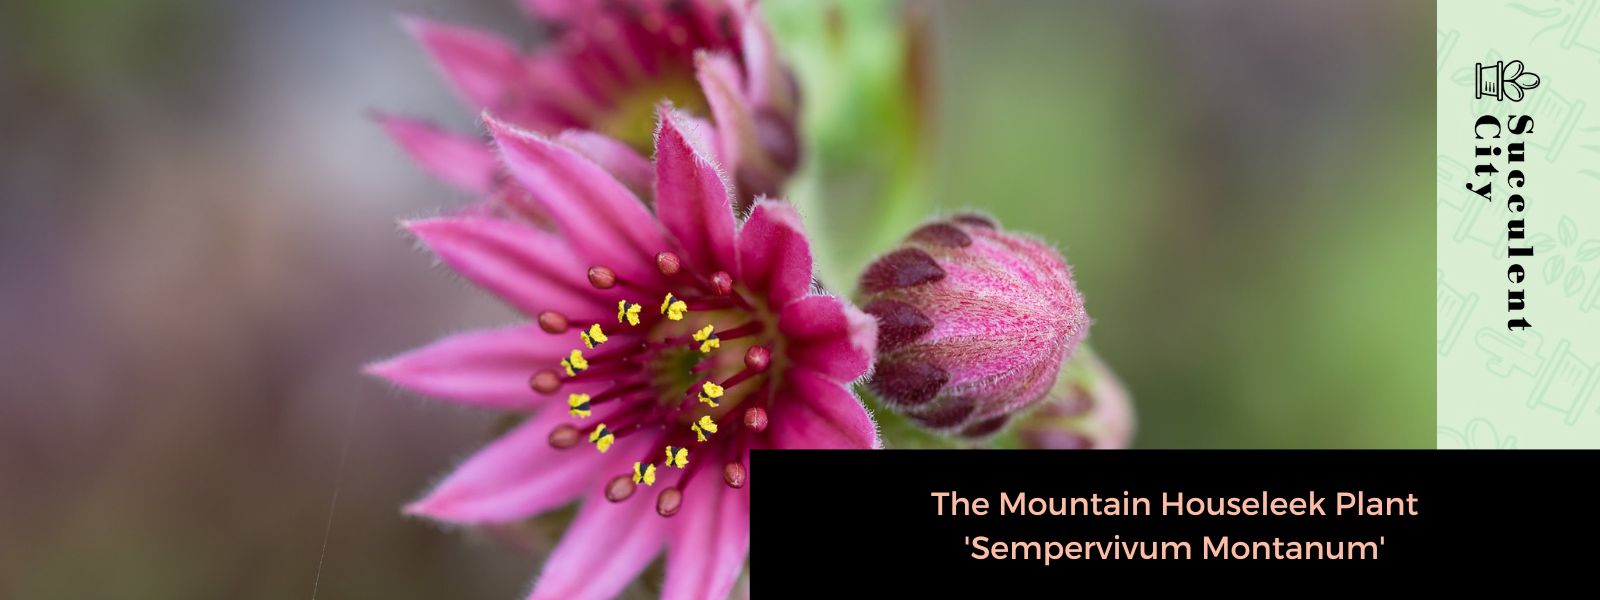 La siempreviva de montaña 'Sempervivum Montanum'